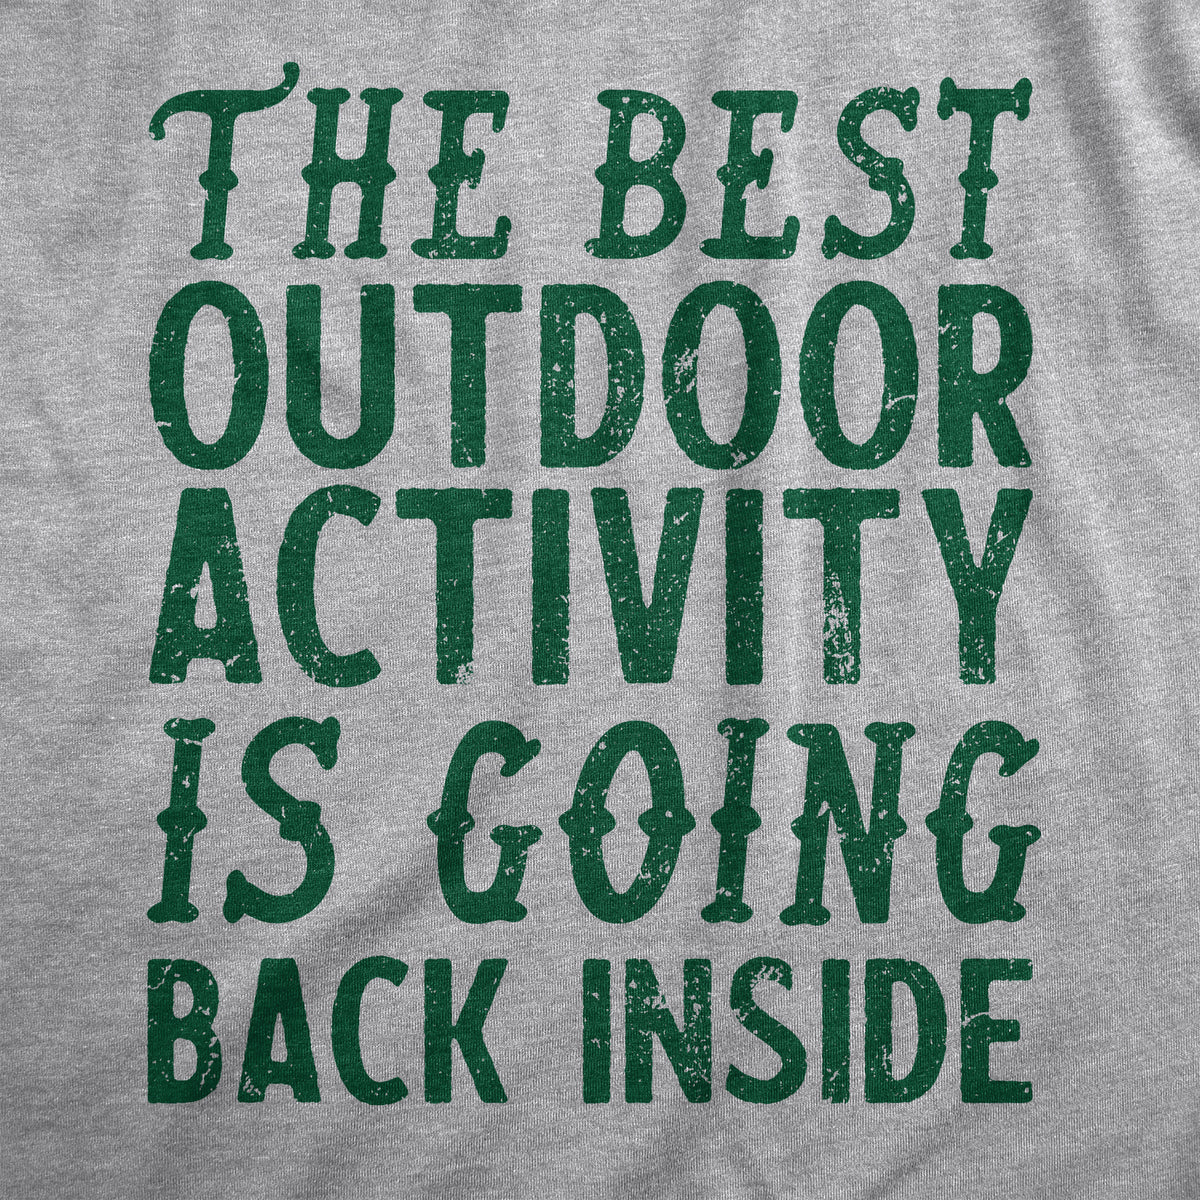 The Best Outdoor Activity Is Going Back Inside Women&#39;s T Shirt